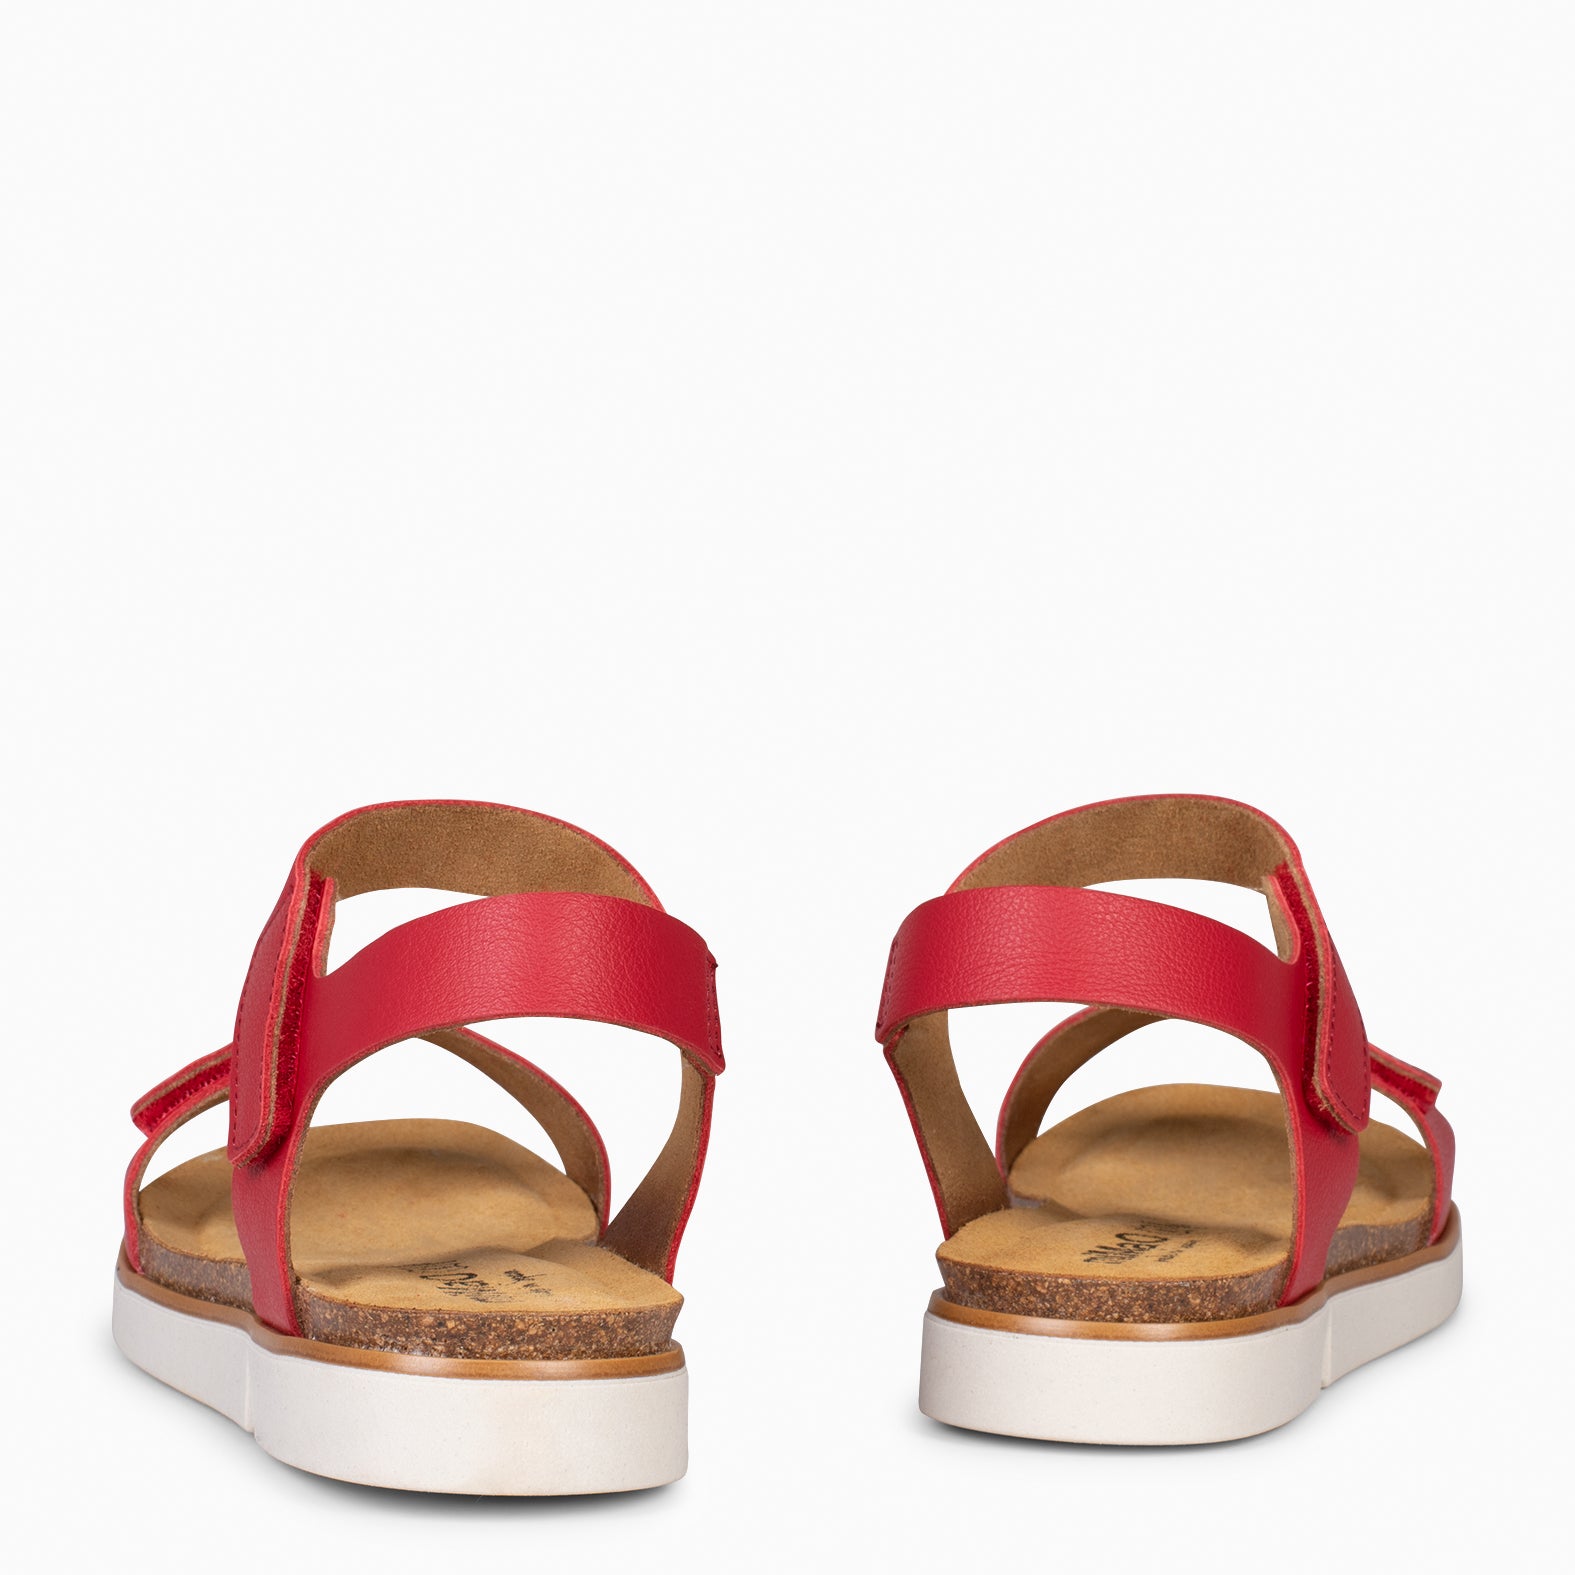 ARALIA – RED comfortable flat sandal